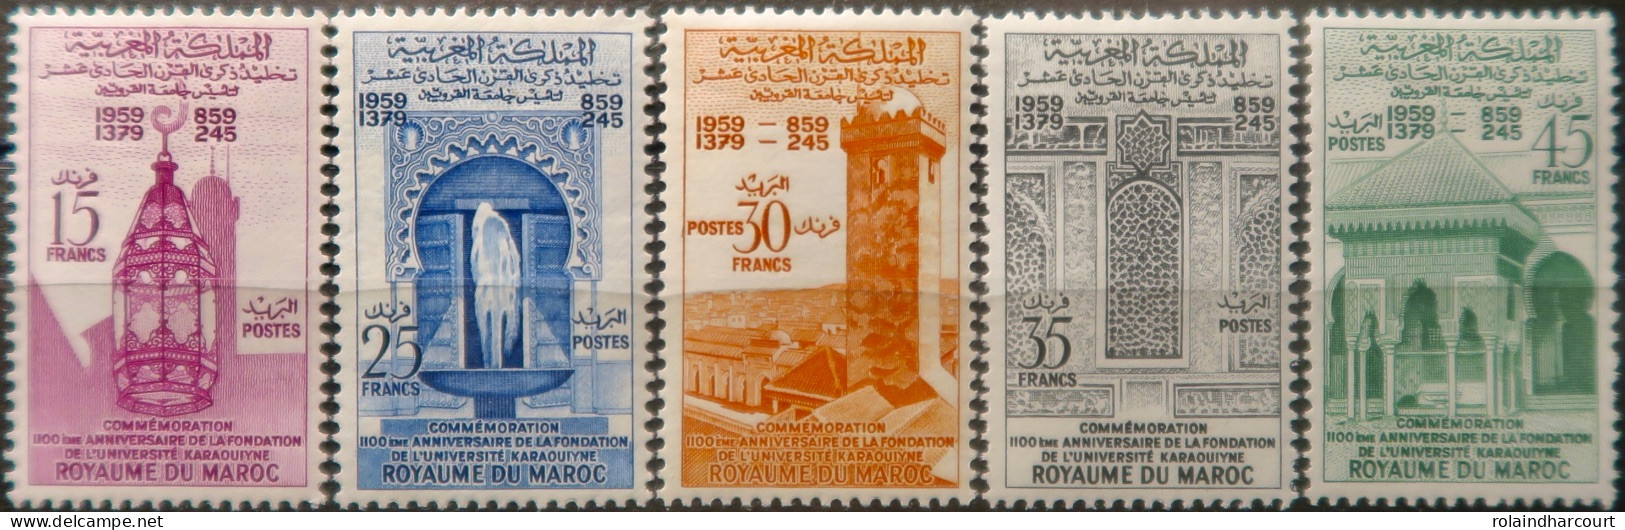 LP3844/2238 - MAROC - 1960 - SERIE COMPLETE - N°405 à 409 NEUFS* - Marokko (1956-...)